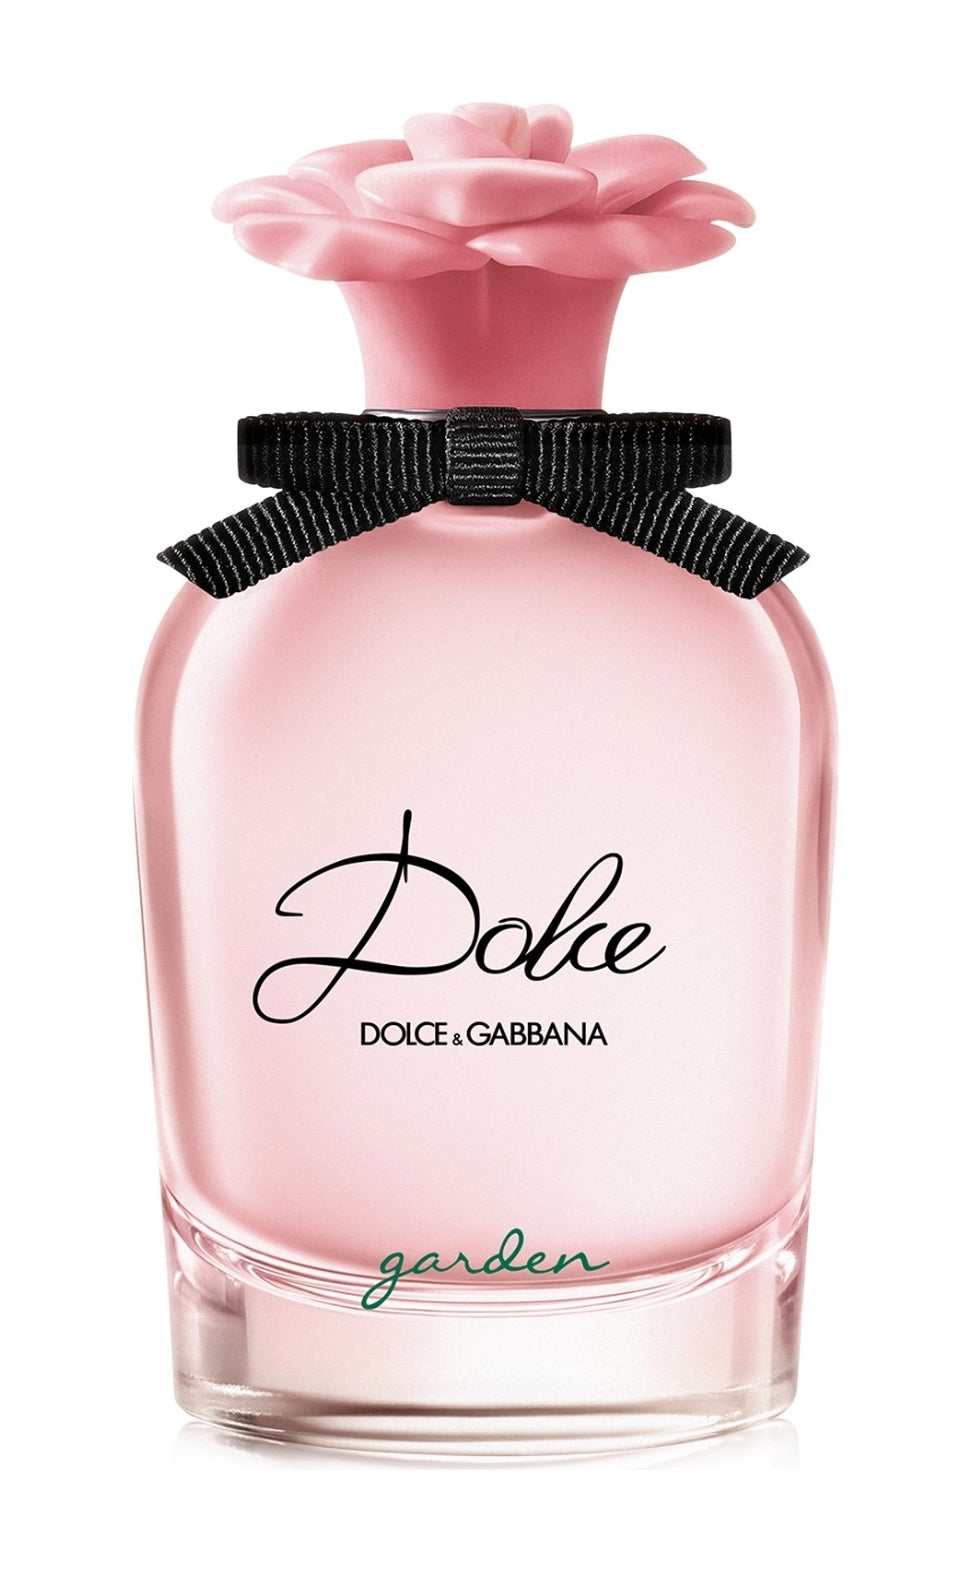 Dolce & Gabbana DOLCE&GABBANA Dolce Garden Eau de Parfum Spray, 2.5 oz